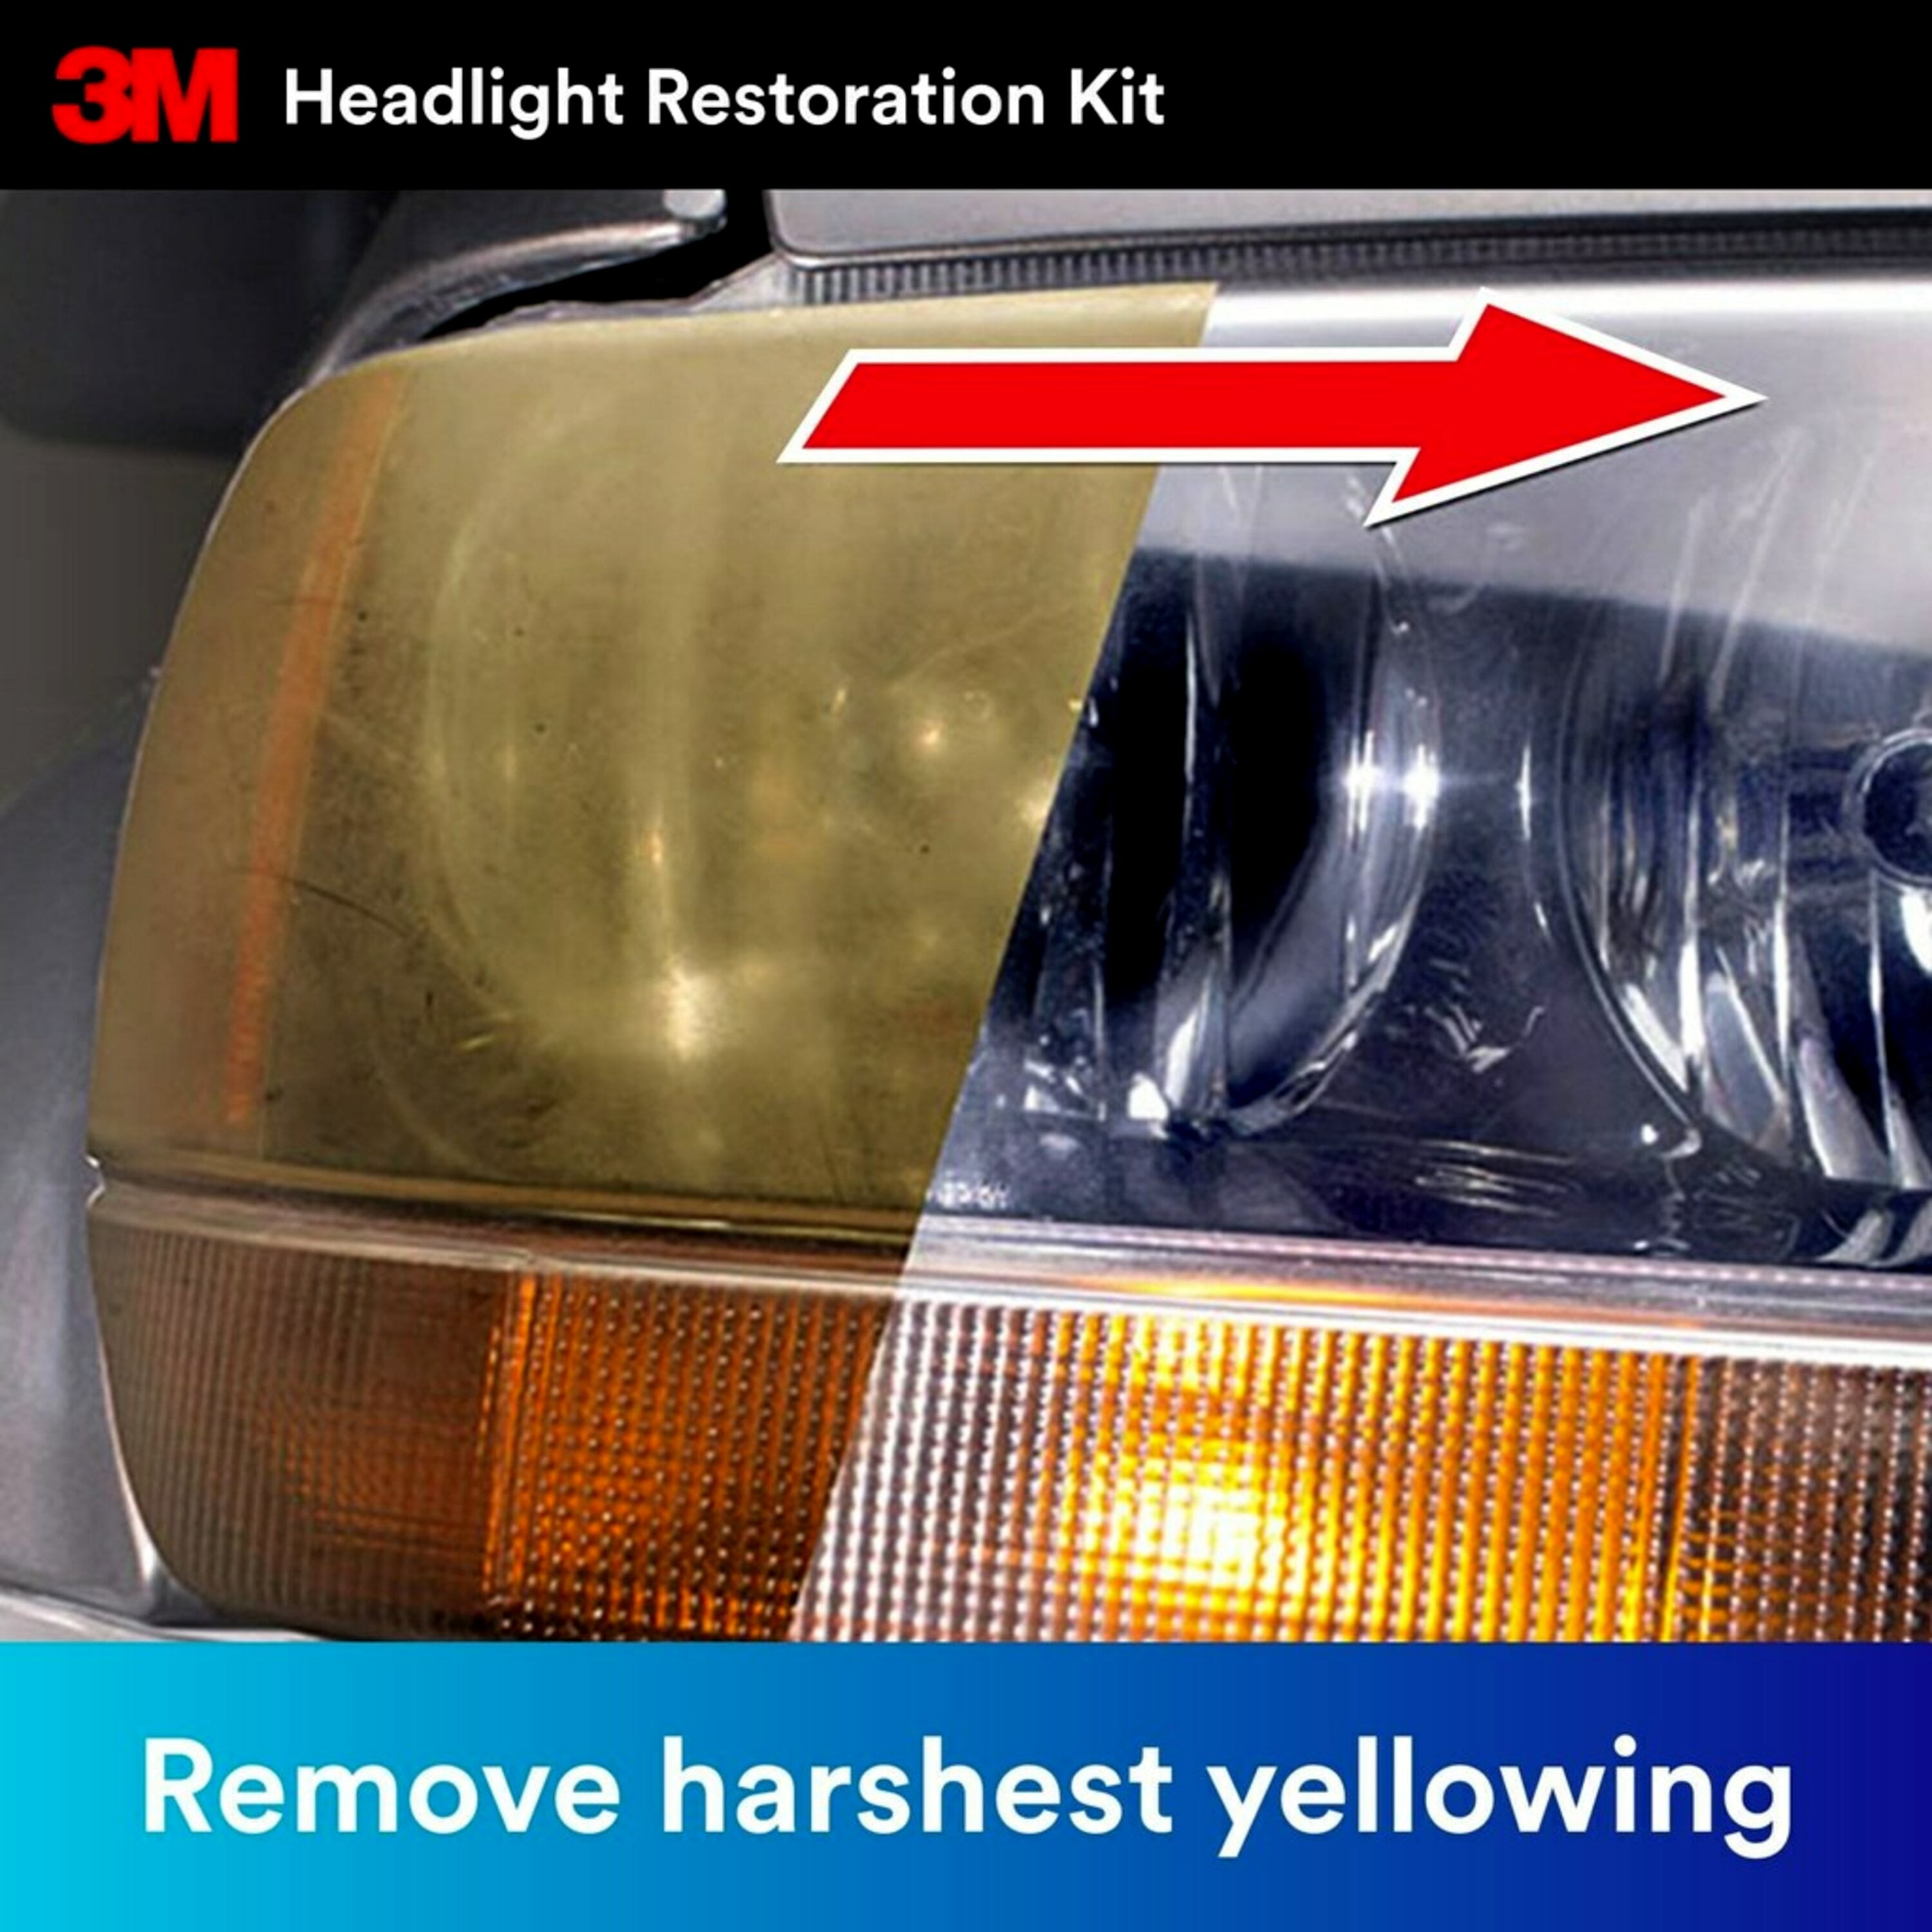 910849-9 3M Headlight Lens Restoration Kit: Professional